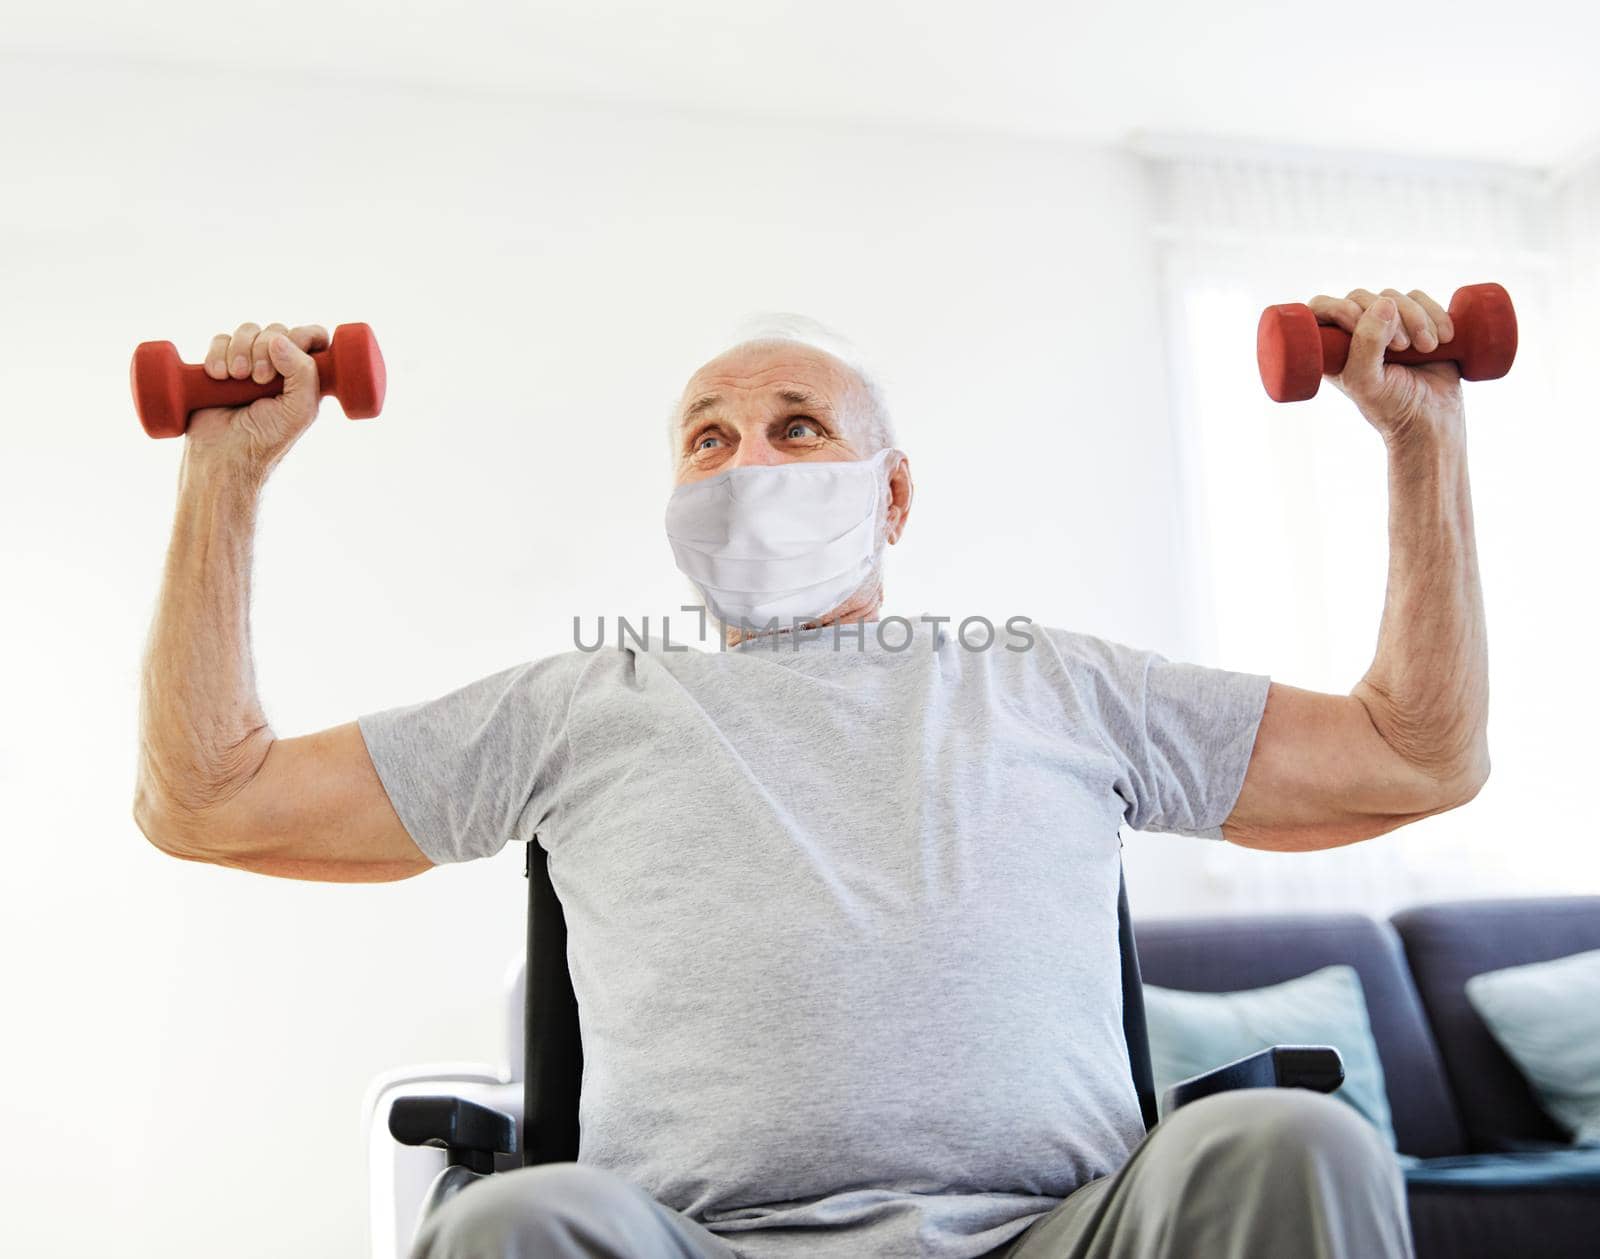 wheelchair senior man exercise physical therapy exercising man dumbbell corona virus mask epidemic by Picsfive